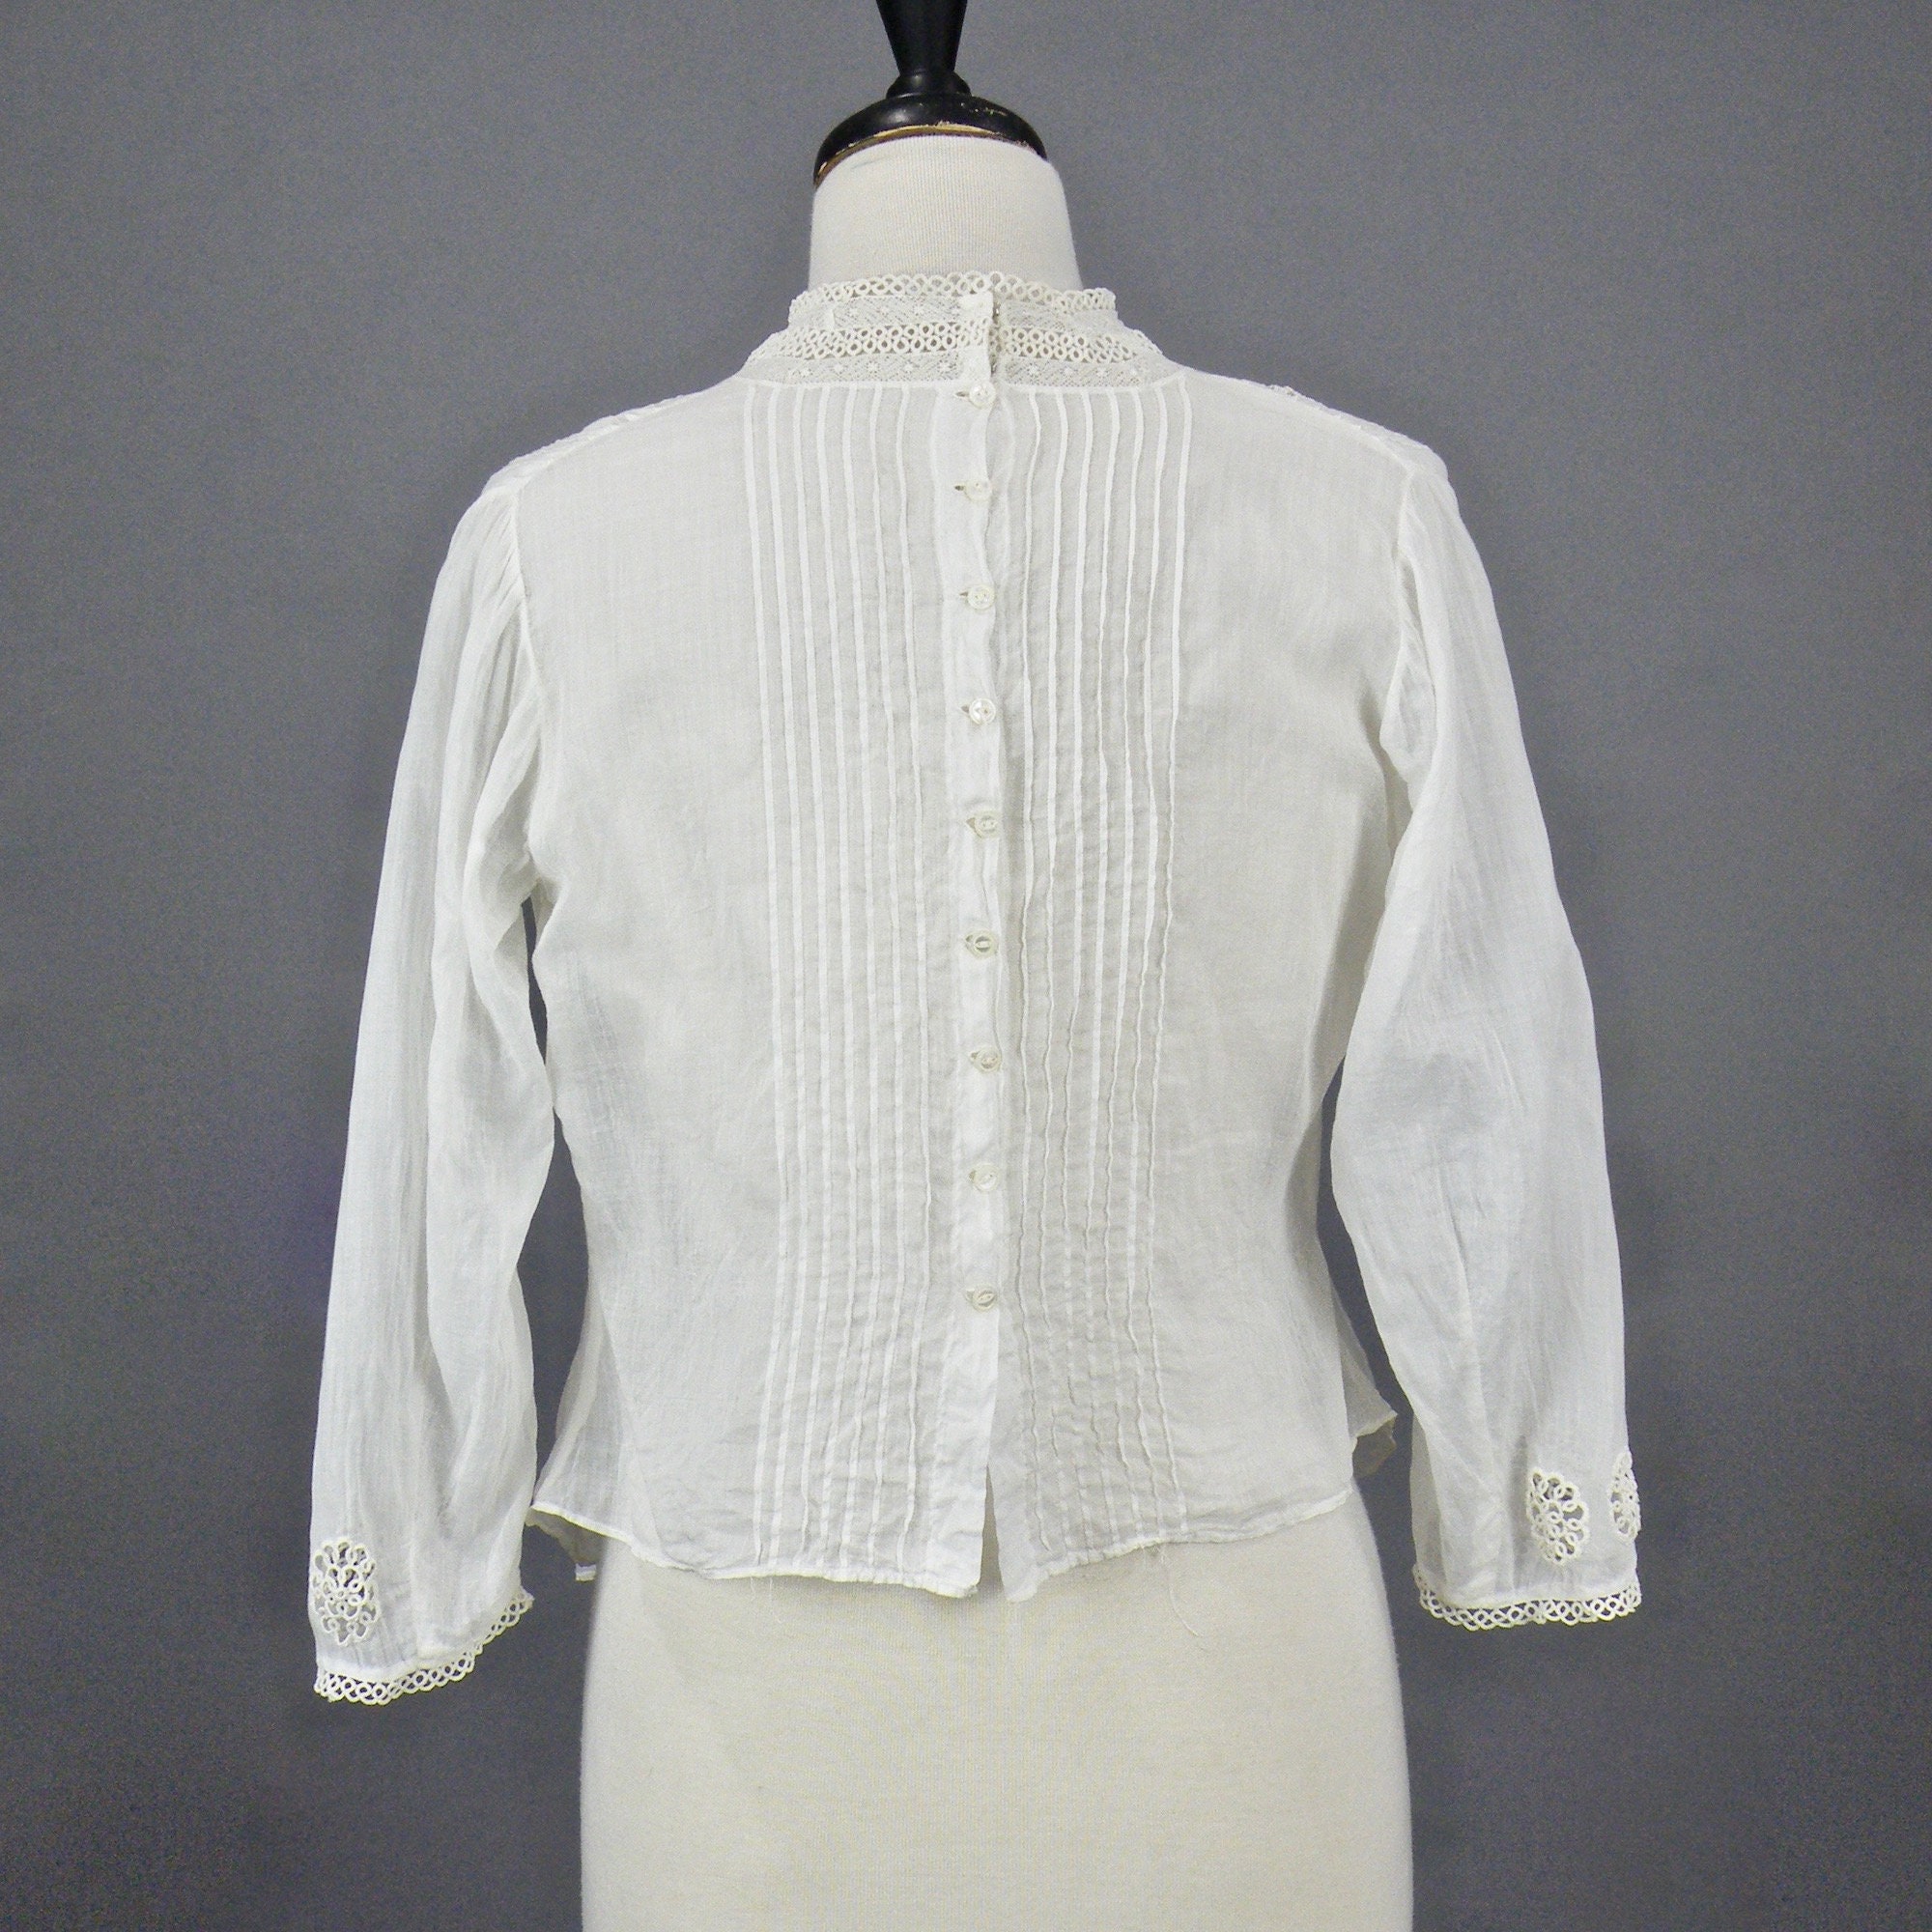 Antique 1910s White Cotton Tatted Lace Edwardian Blouse, Medium